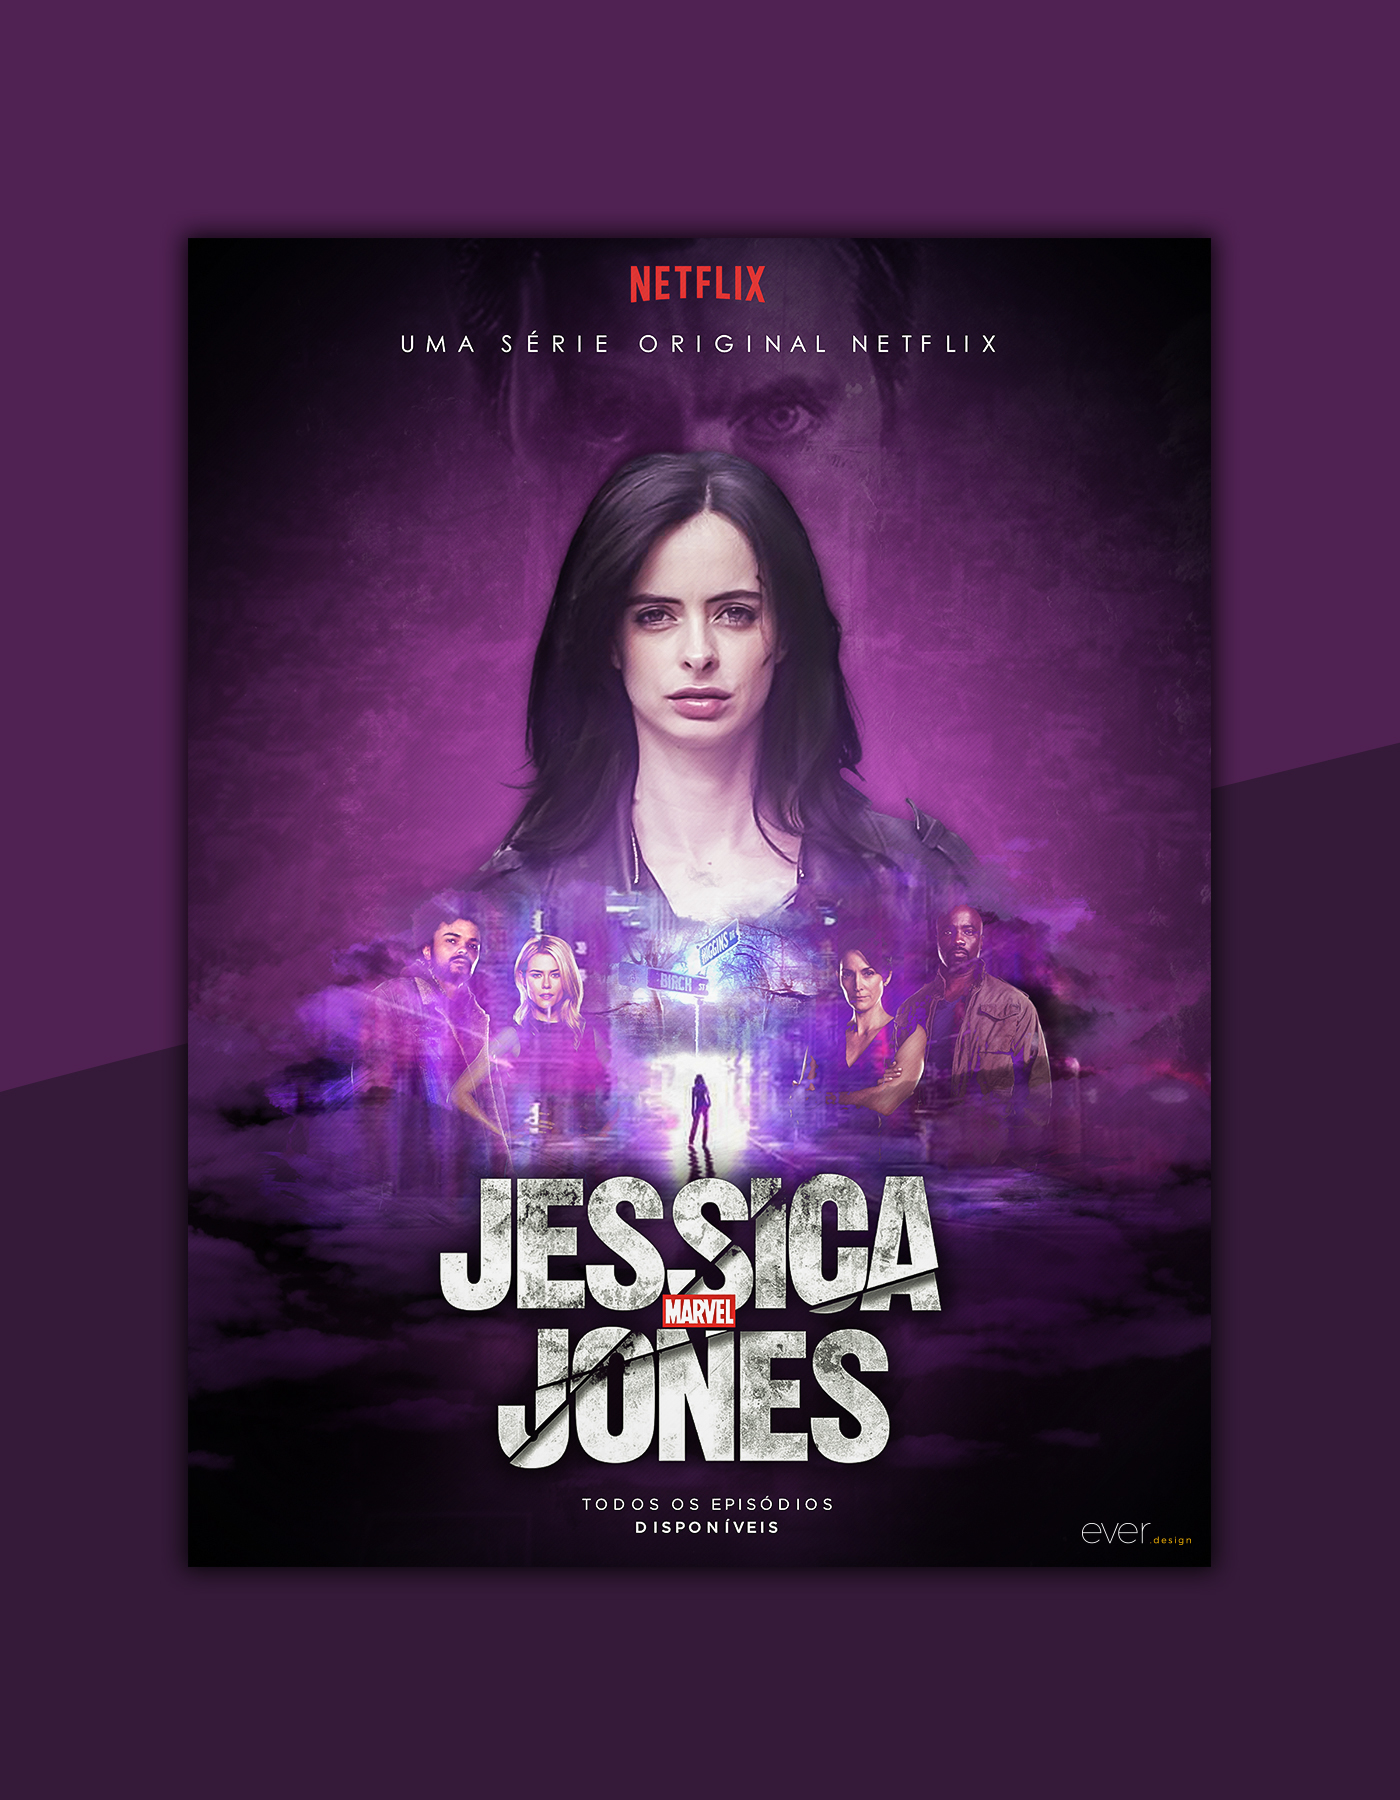 jessicajones Jones Netflix cartaz concept Proporção aurea marvel poster fanart